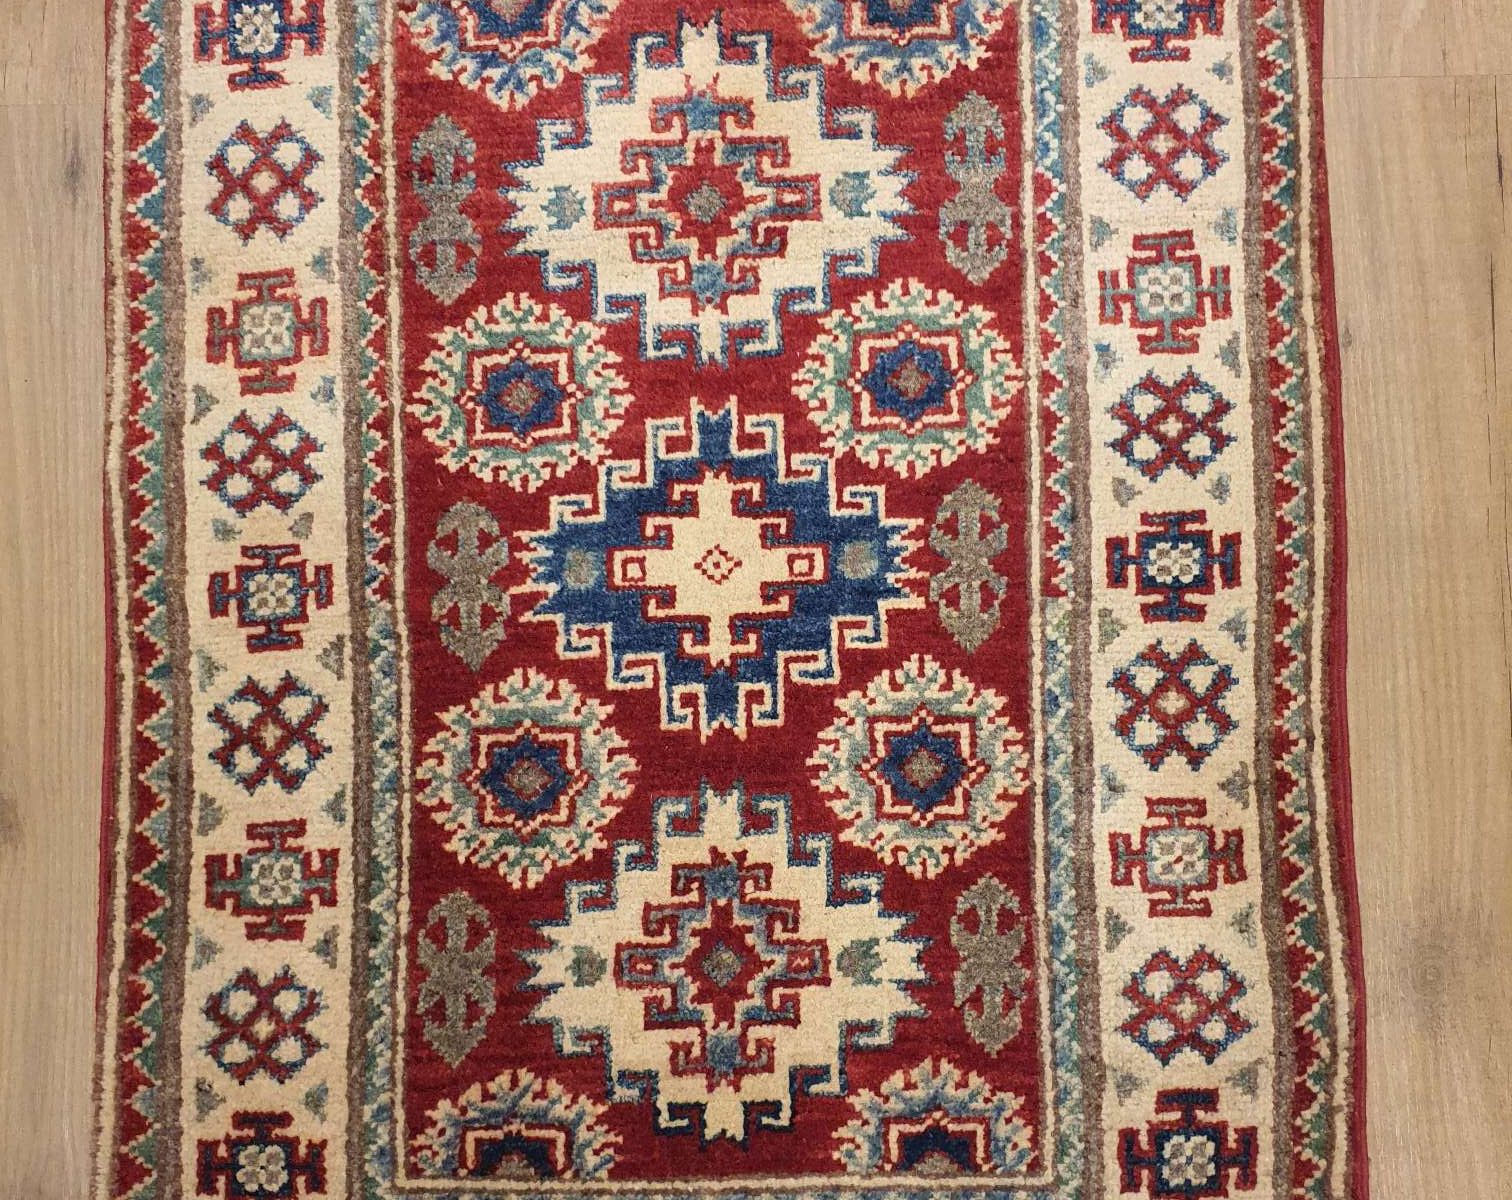 088x61 handgeknoopt oosters tapijt kazak ID14333